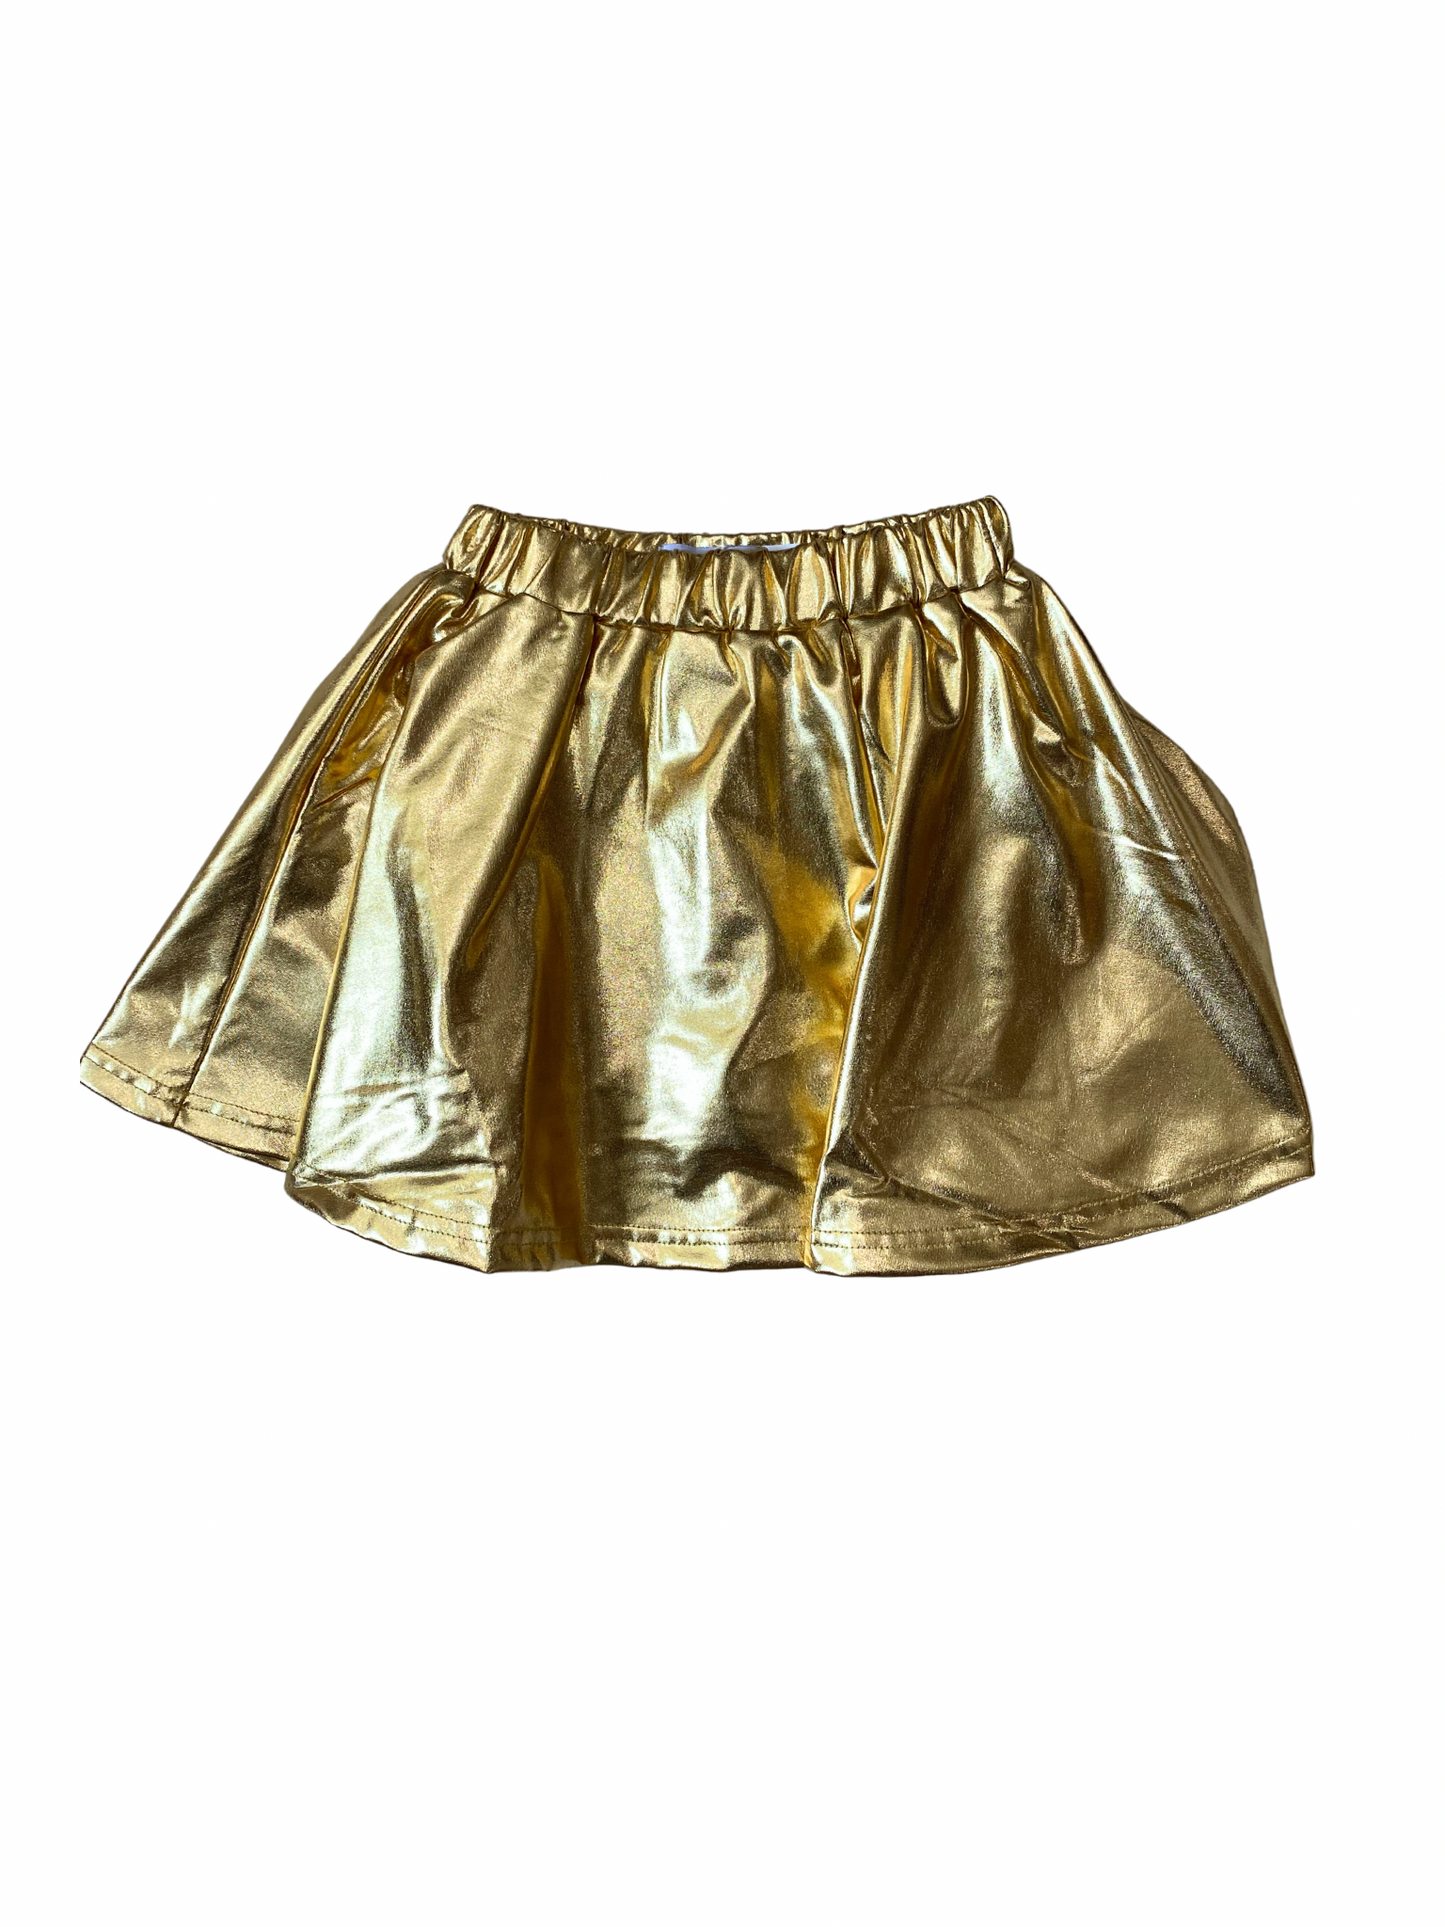 Gold Metallic Skirt w/ Built-In Shorts